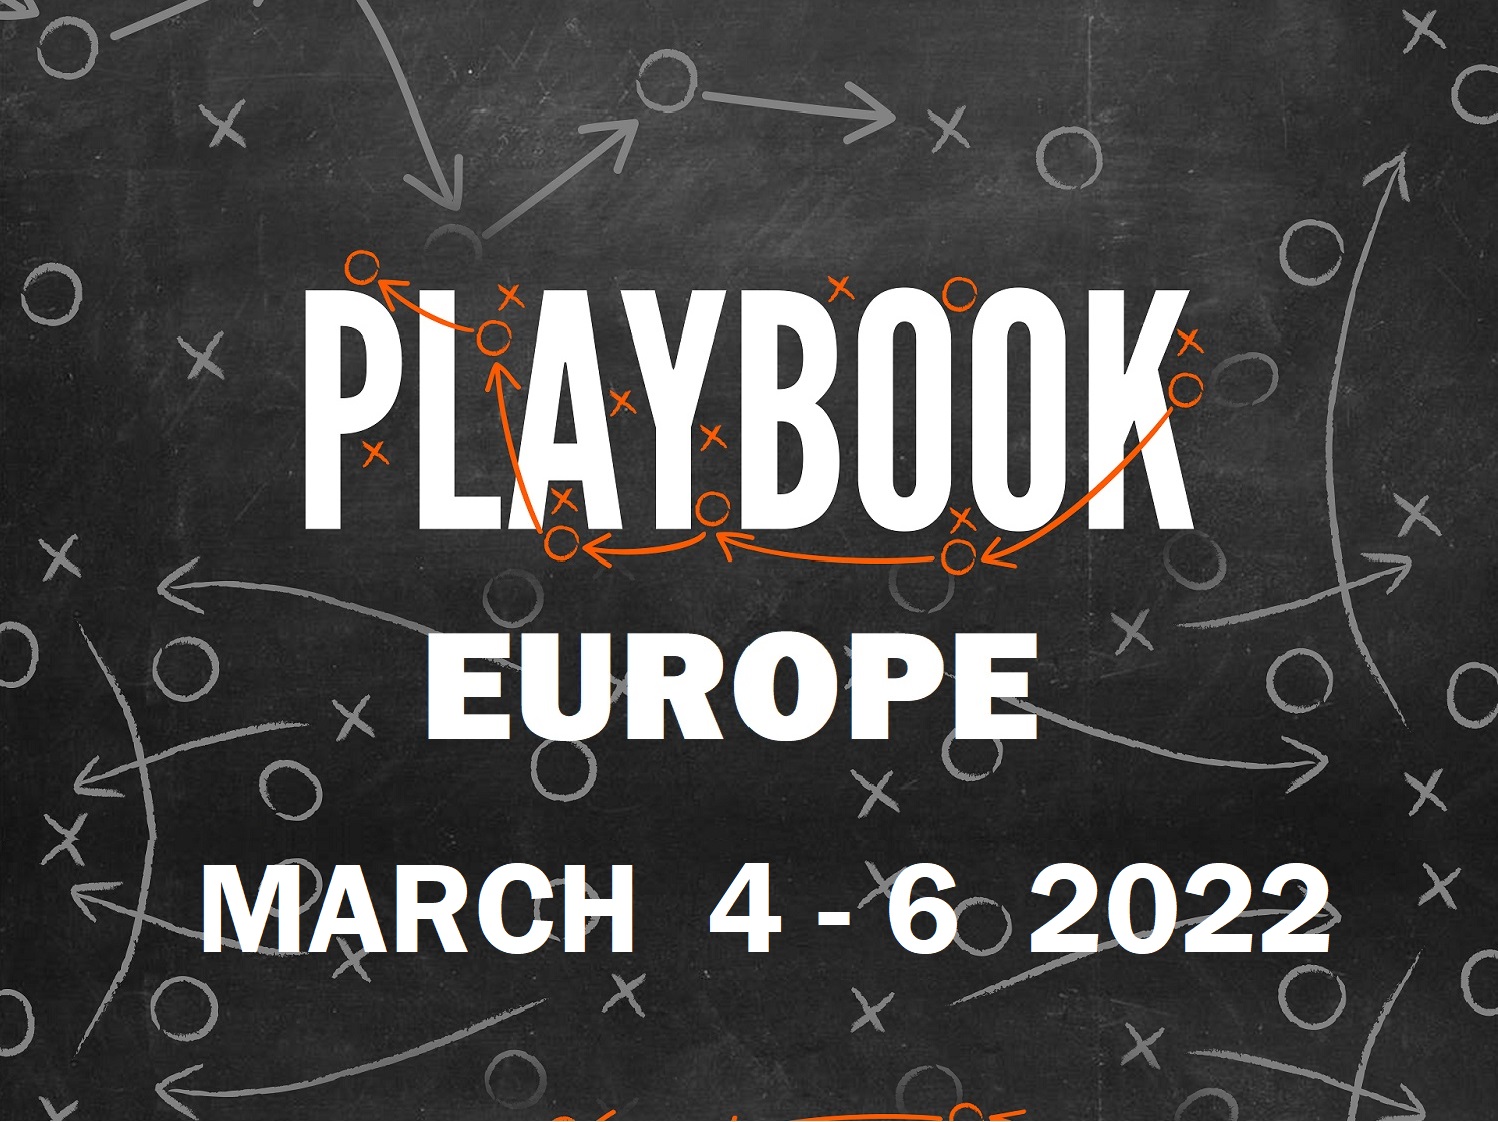 Playbook Europe